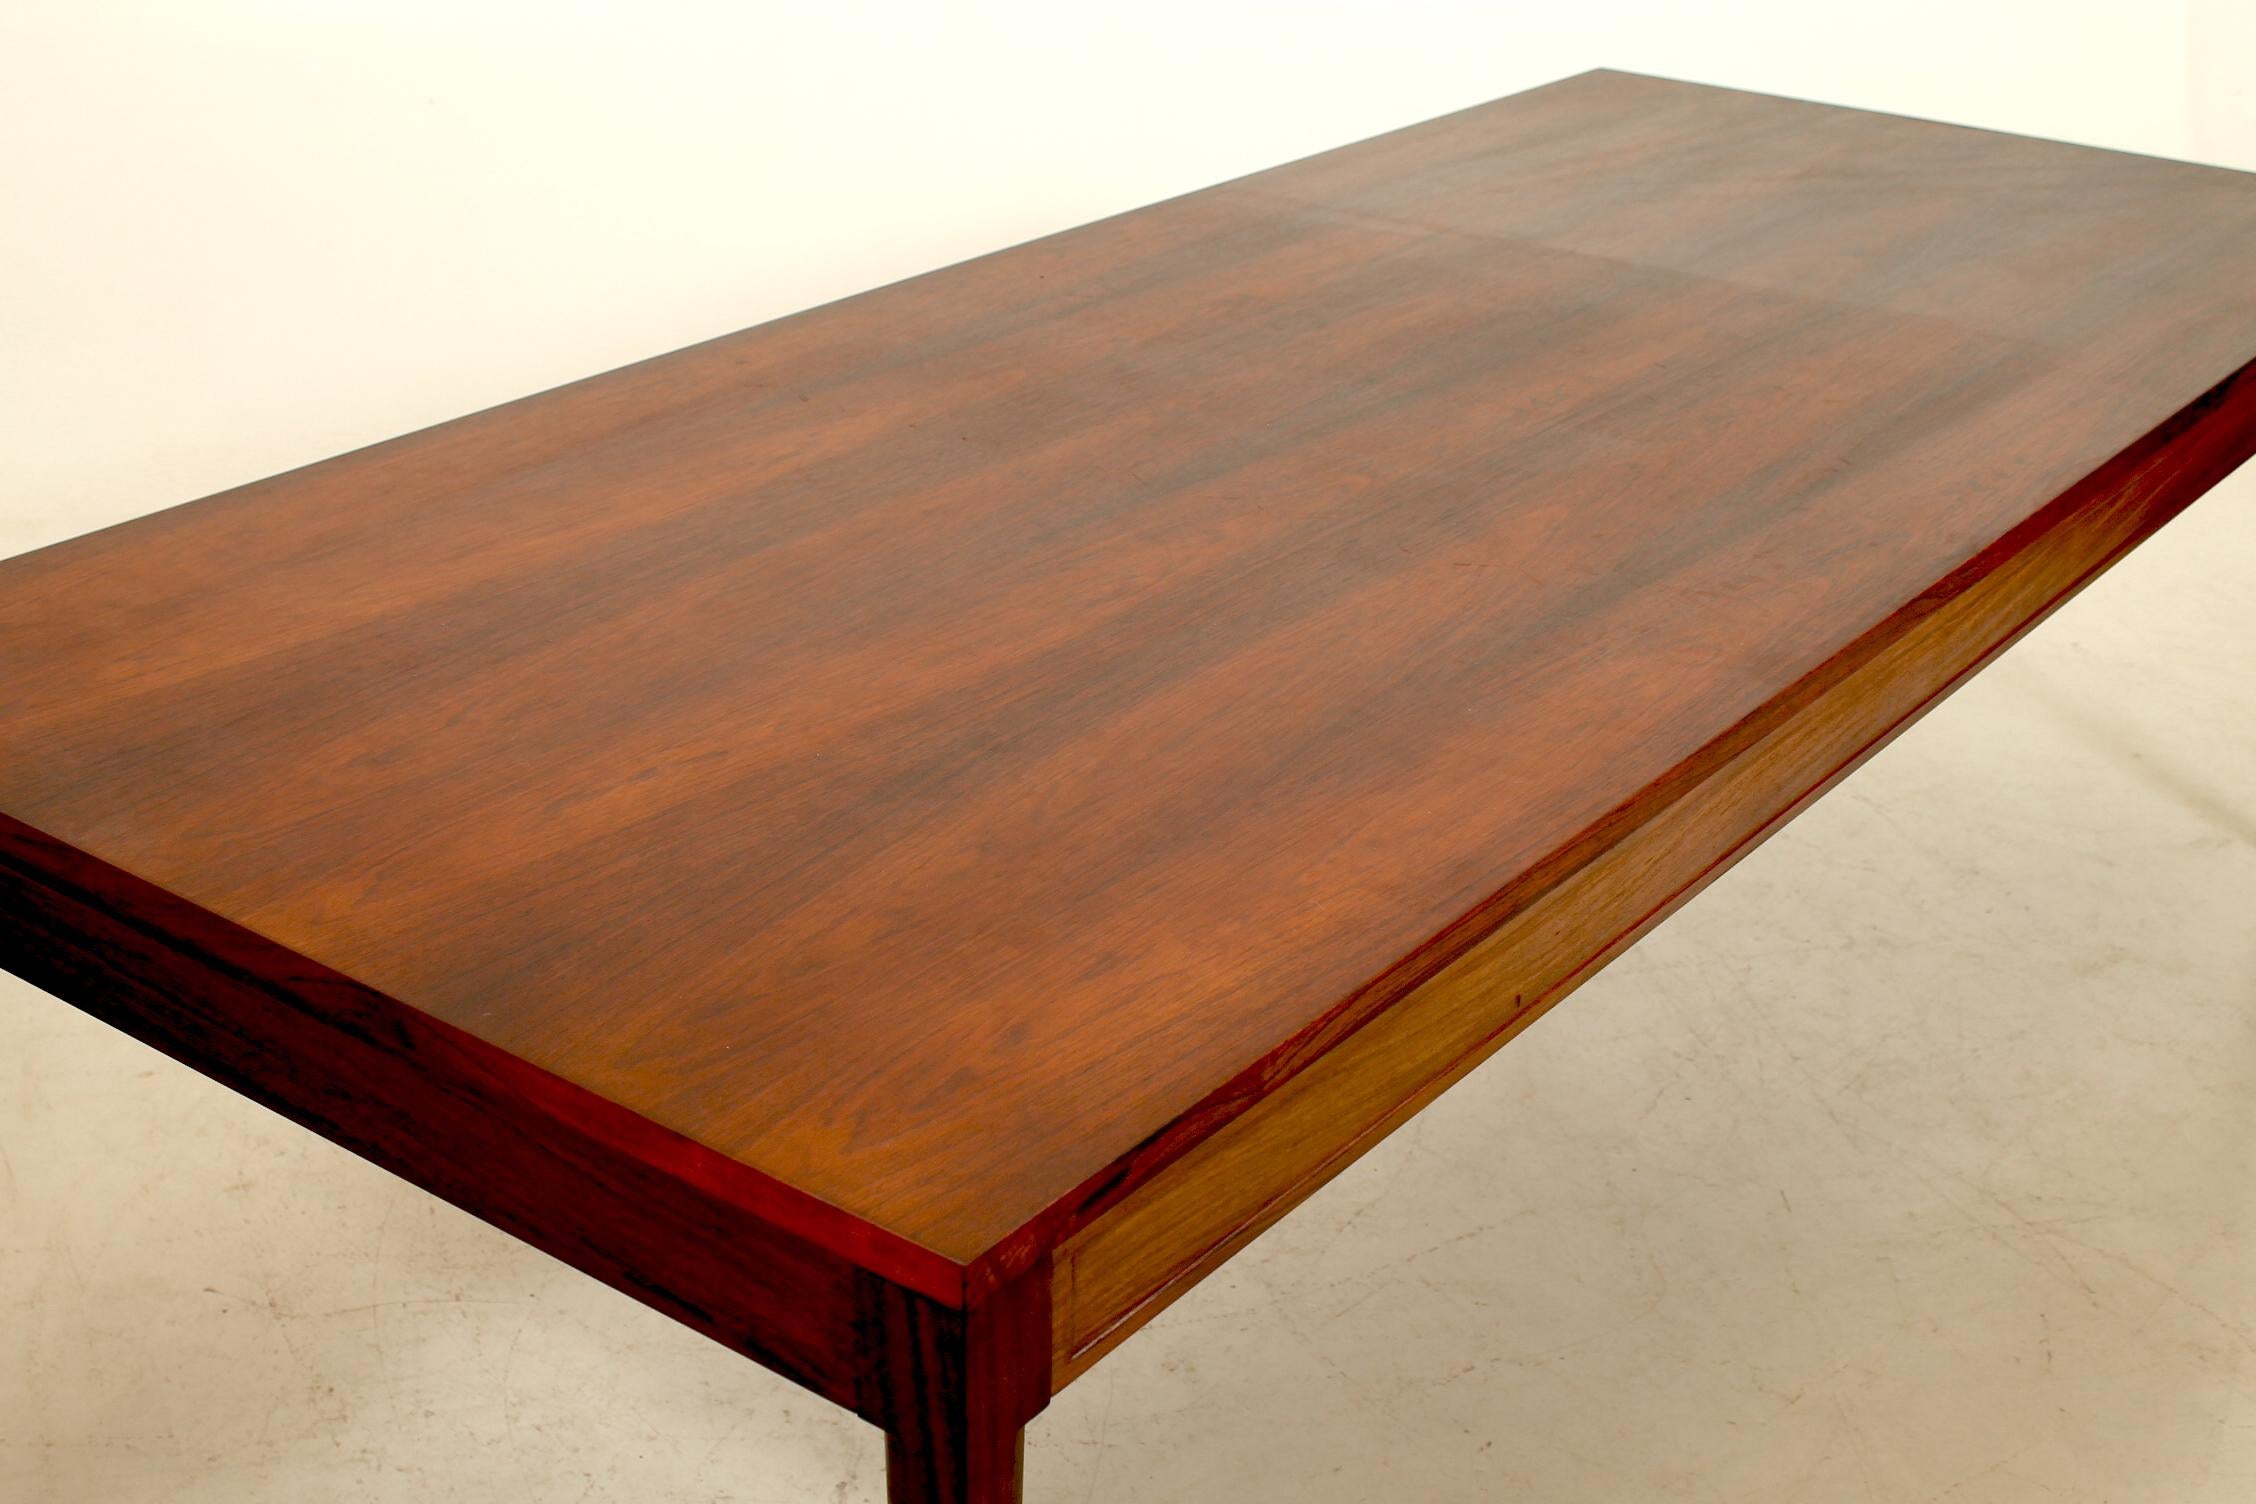 Danish Conference table in rosewood, designed by Finn Juhl, Denmark.